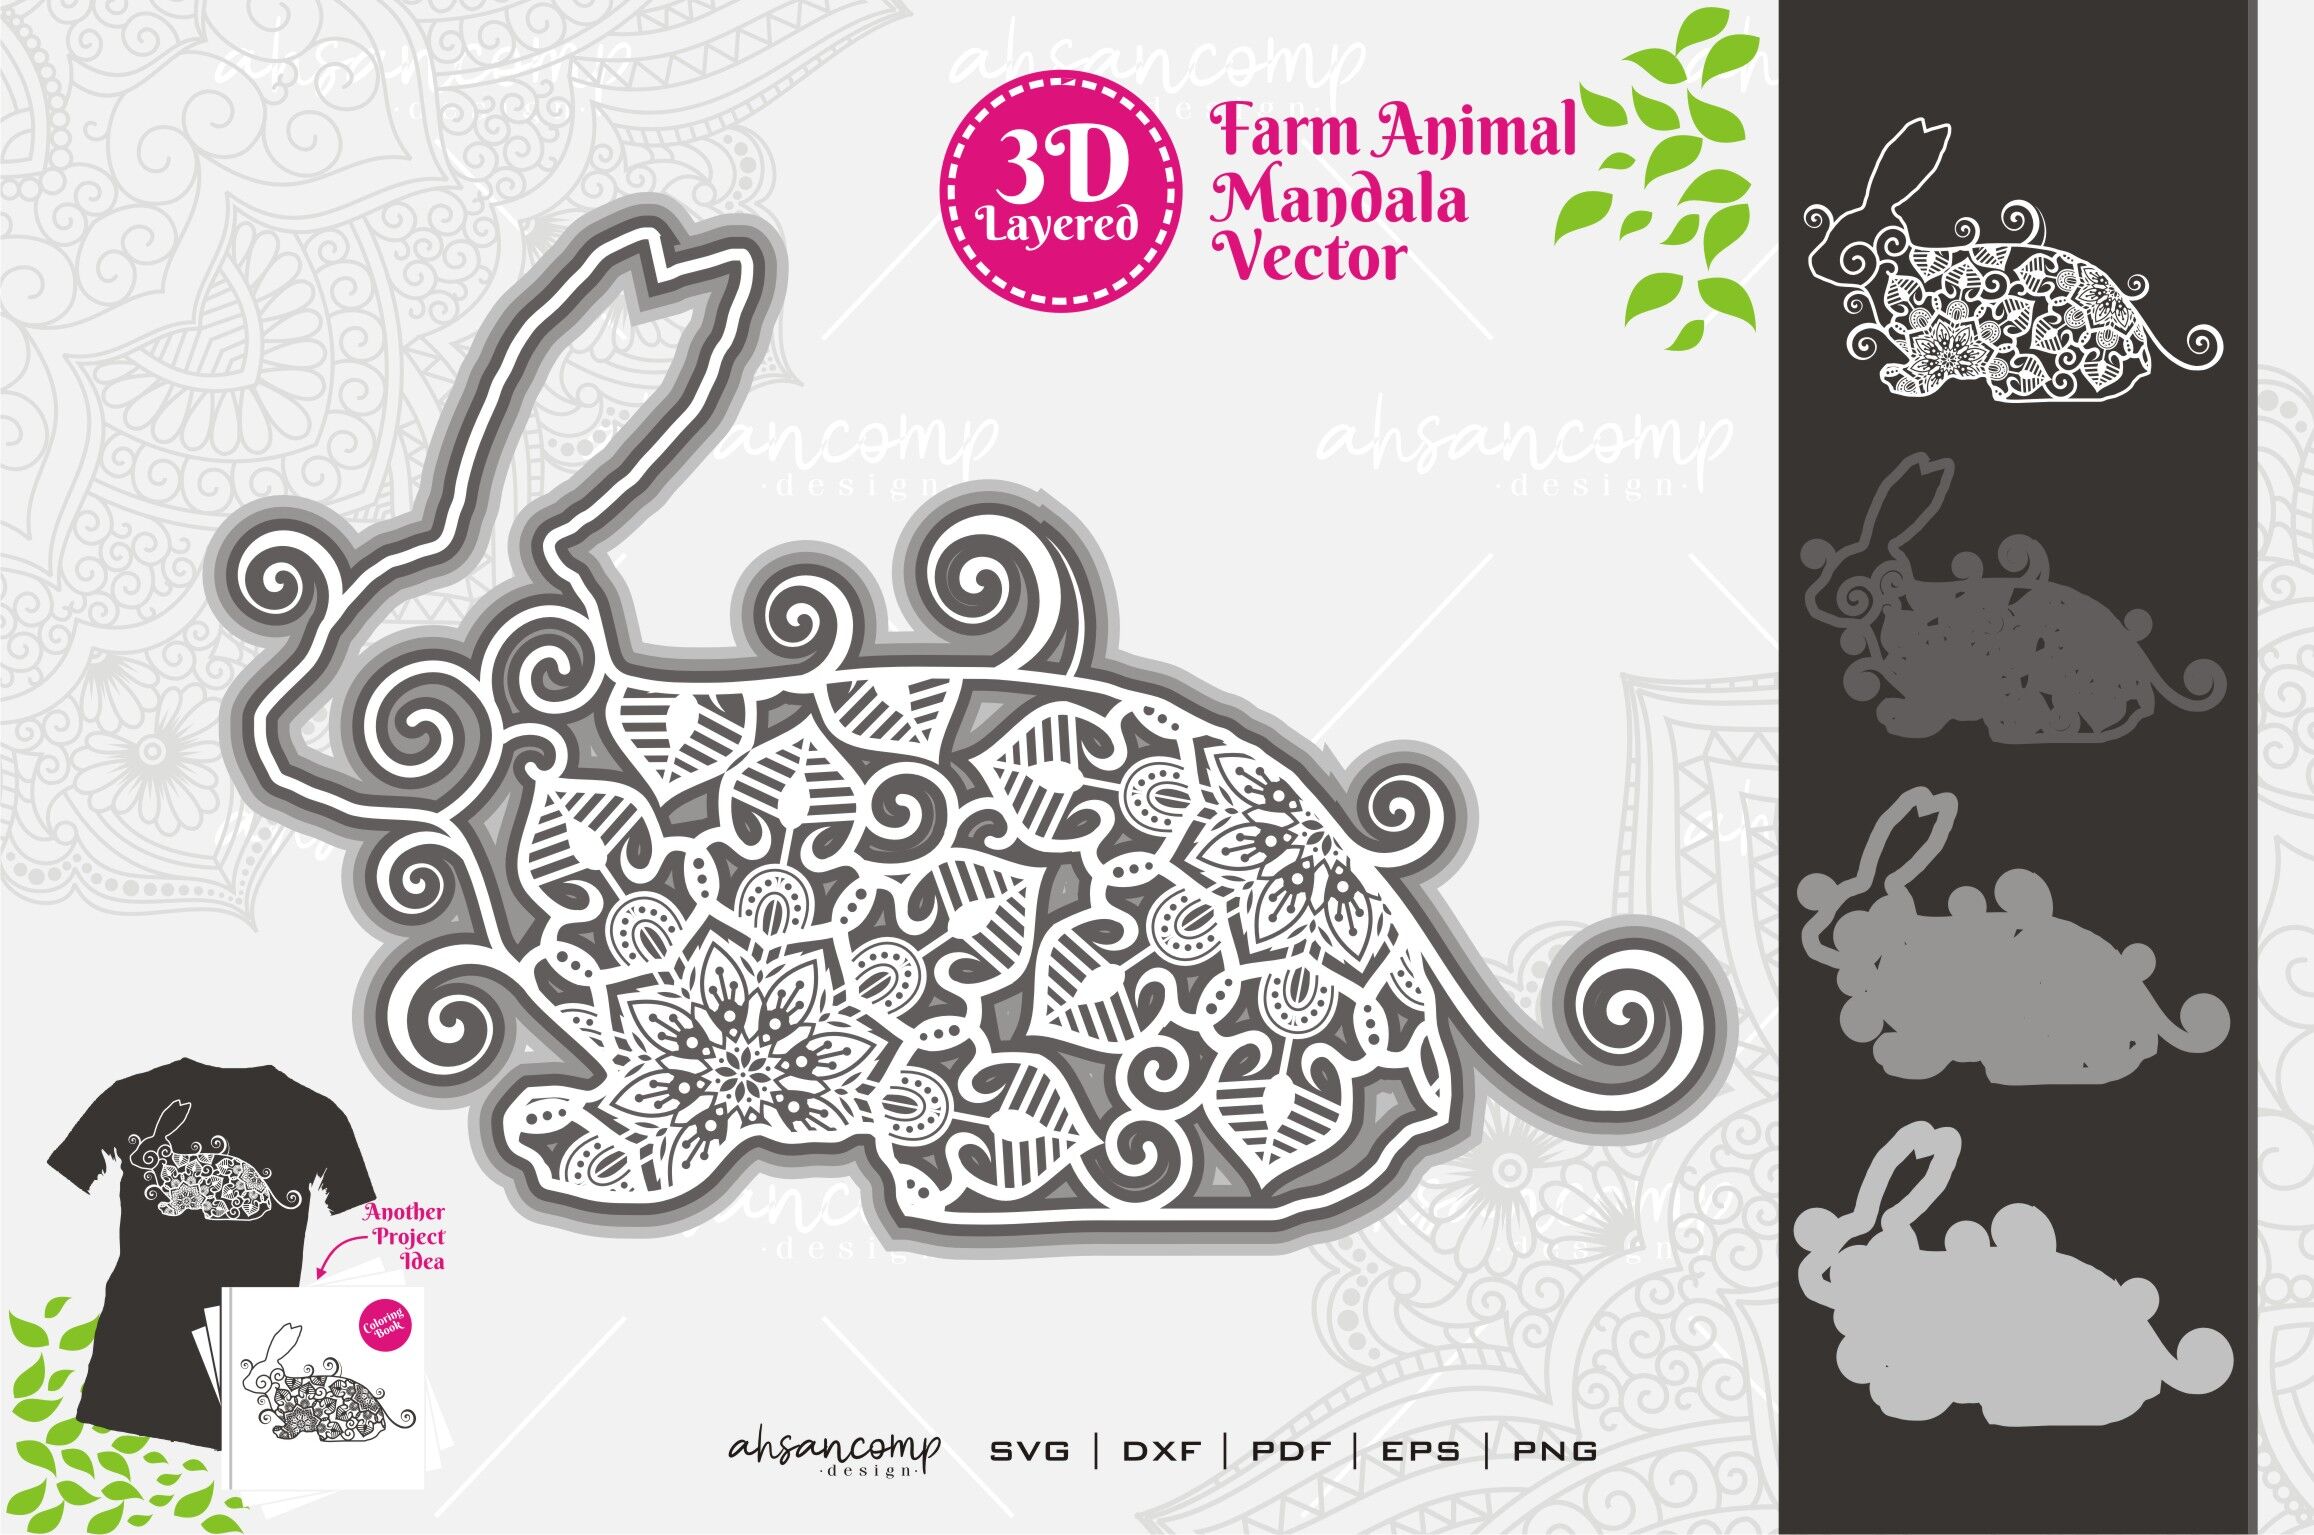 Farm Animal Mandala SVG 3D Layered #1 By Ahsancomp Studio ...